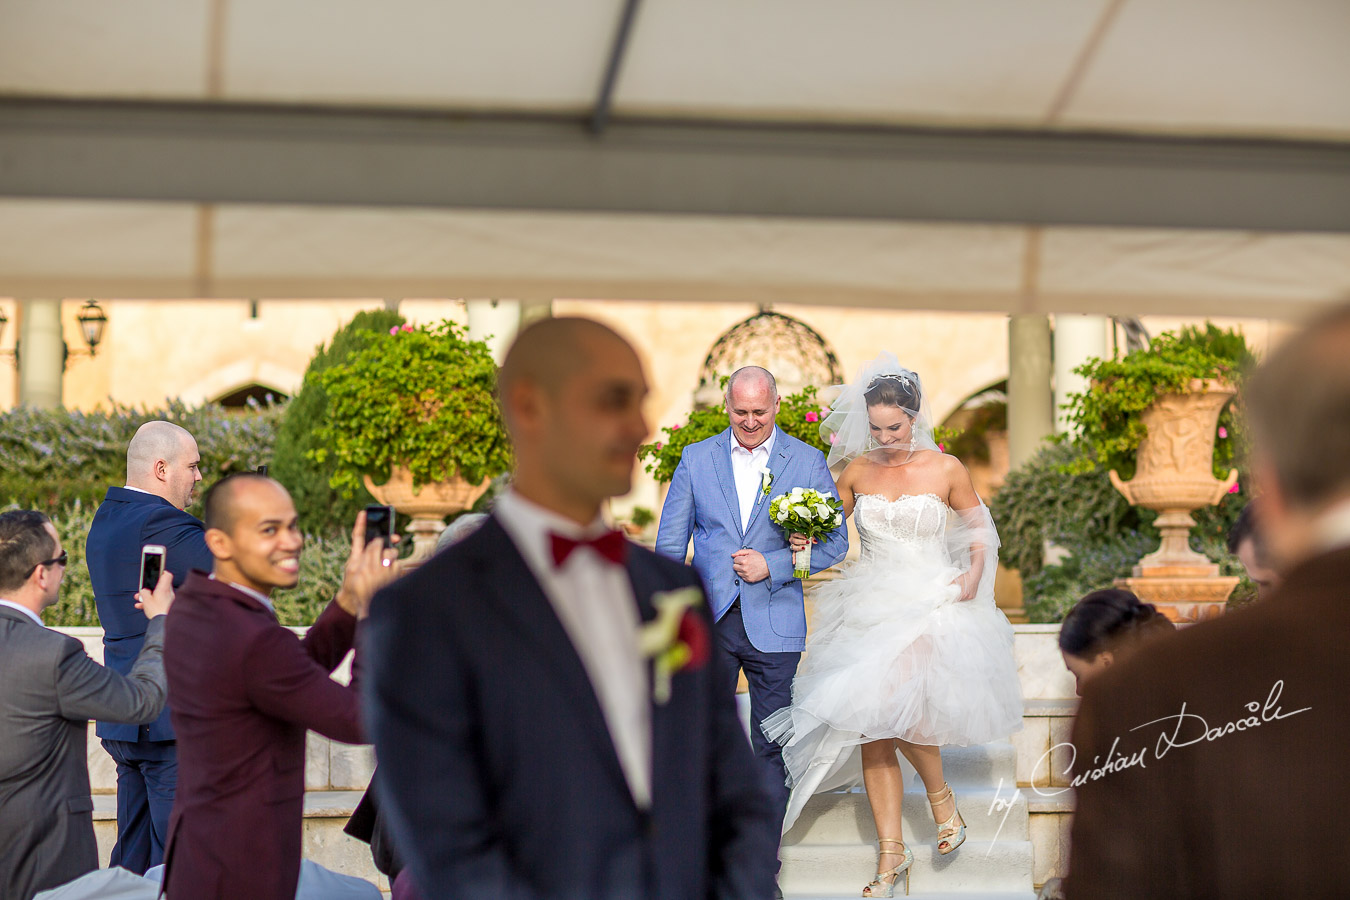 Wedding at The Elysium Hotel in Cyprus - 25